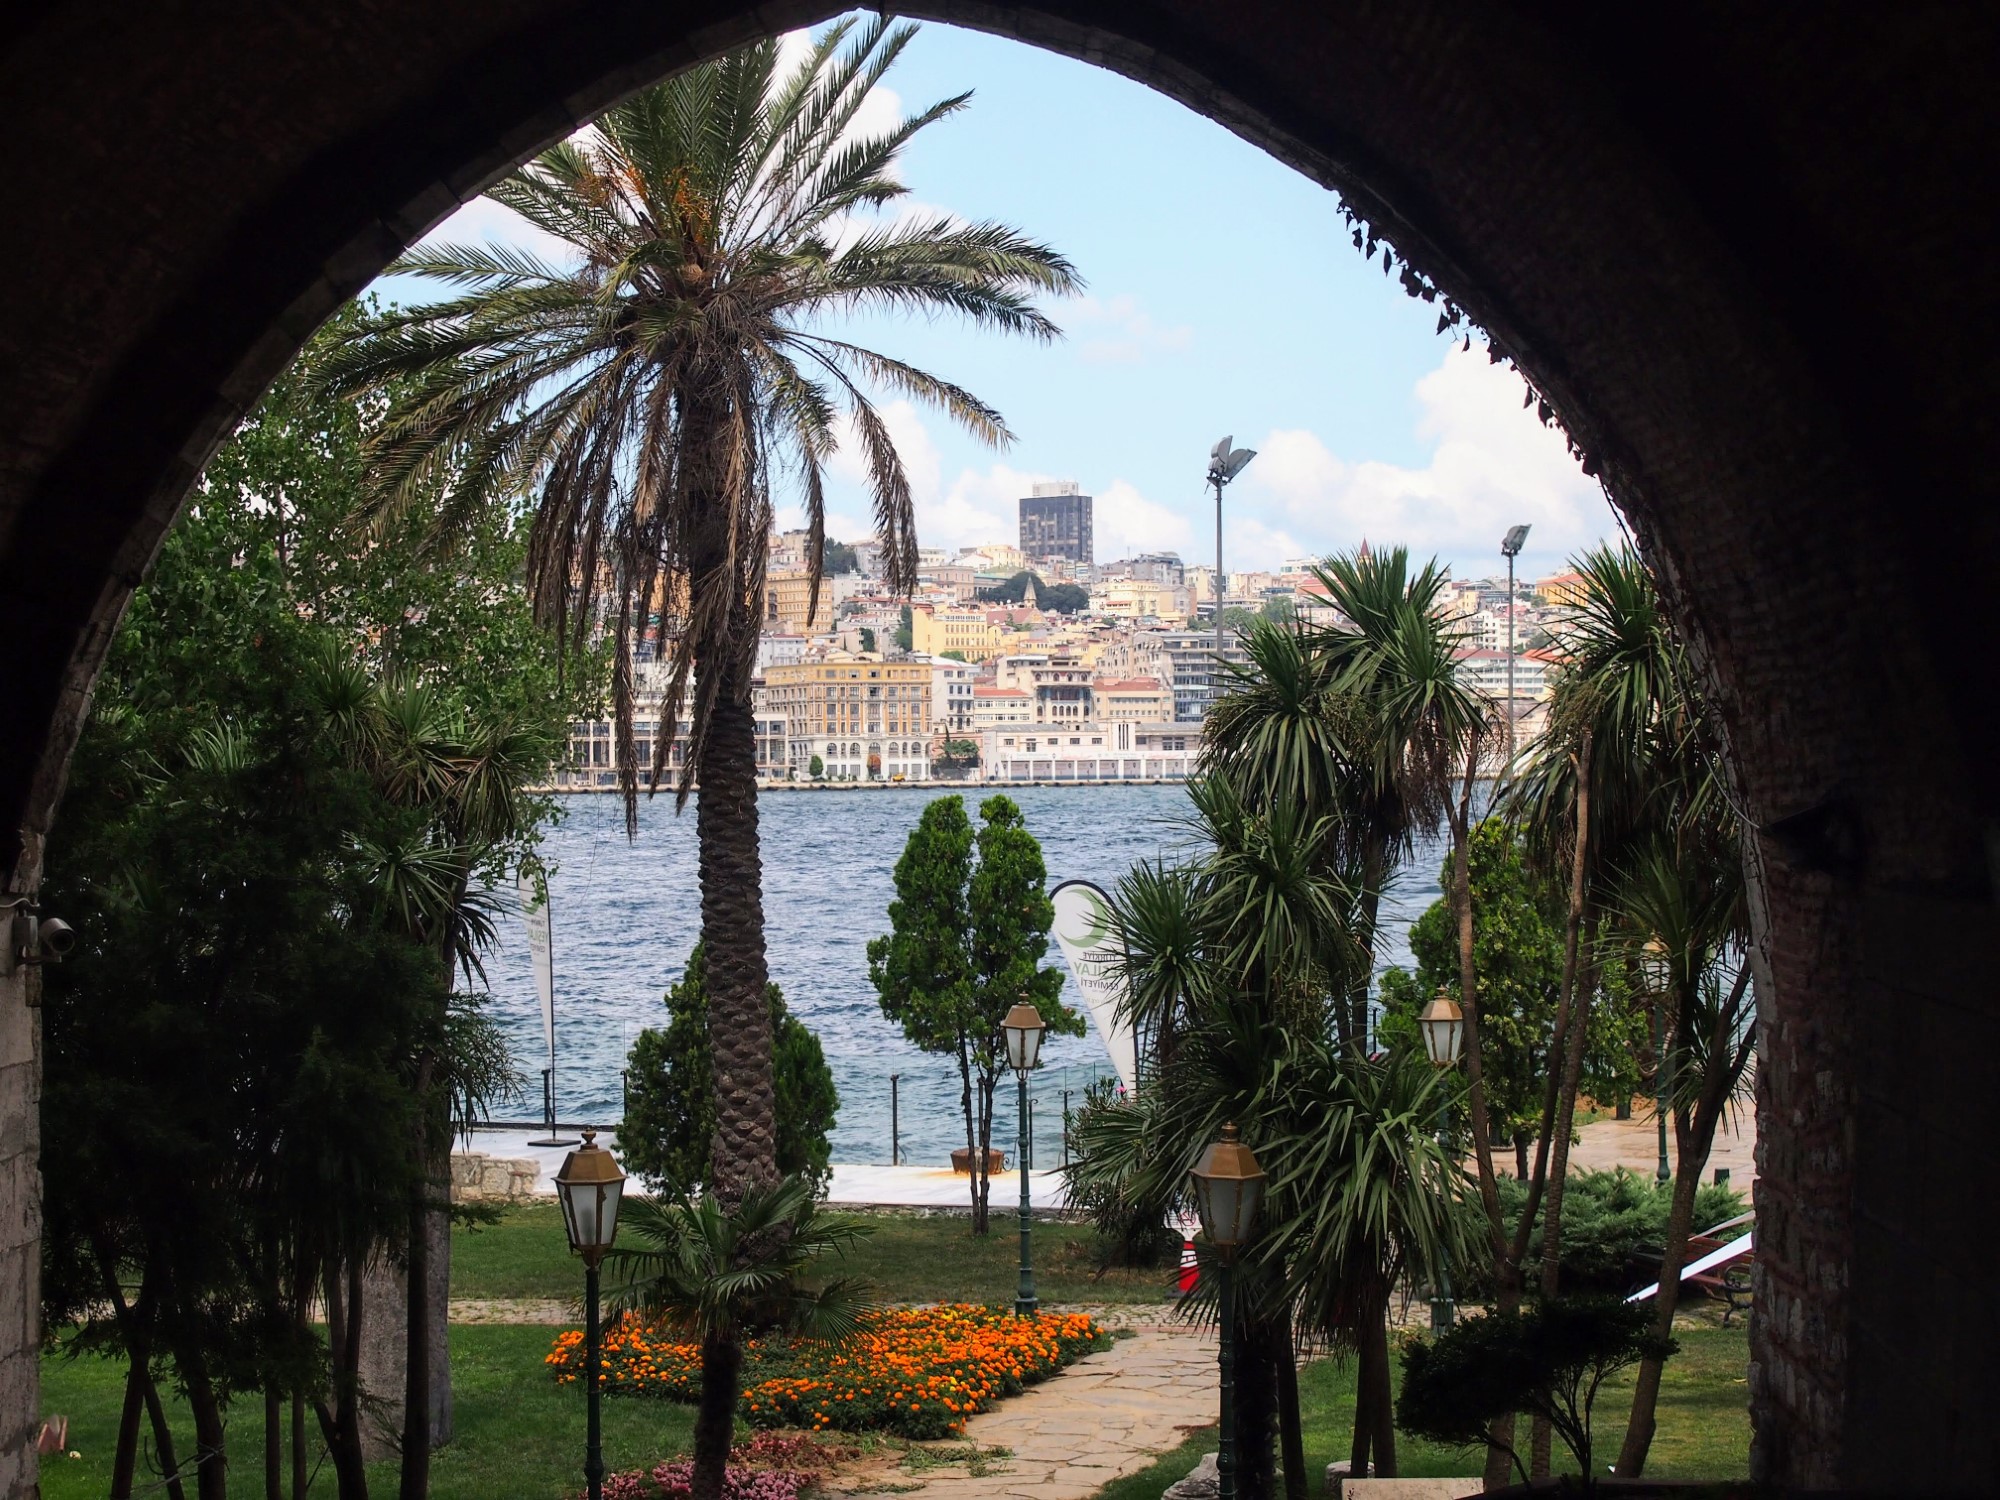 View towards the Bosporus through an archway